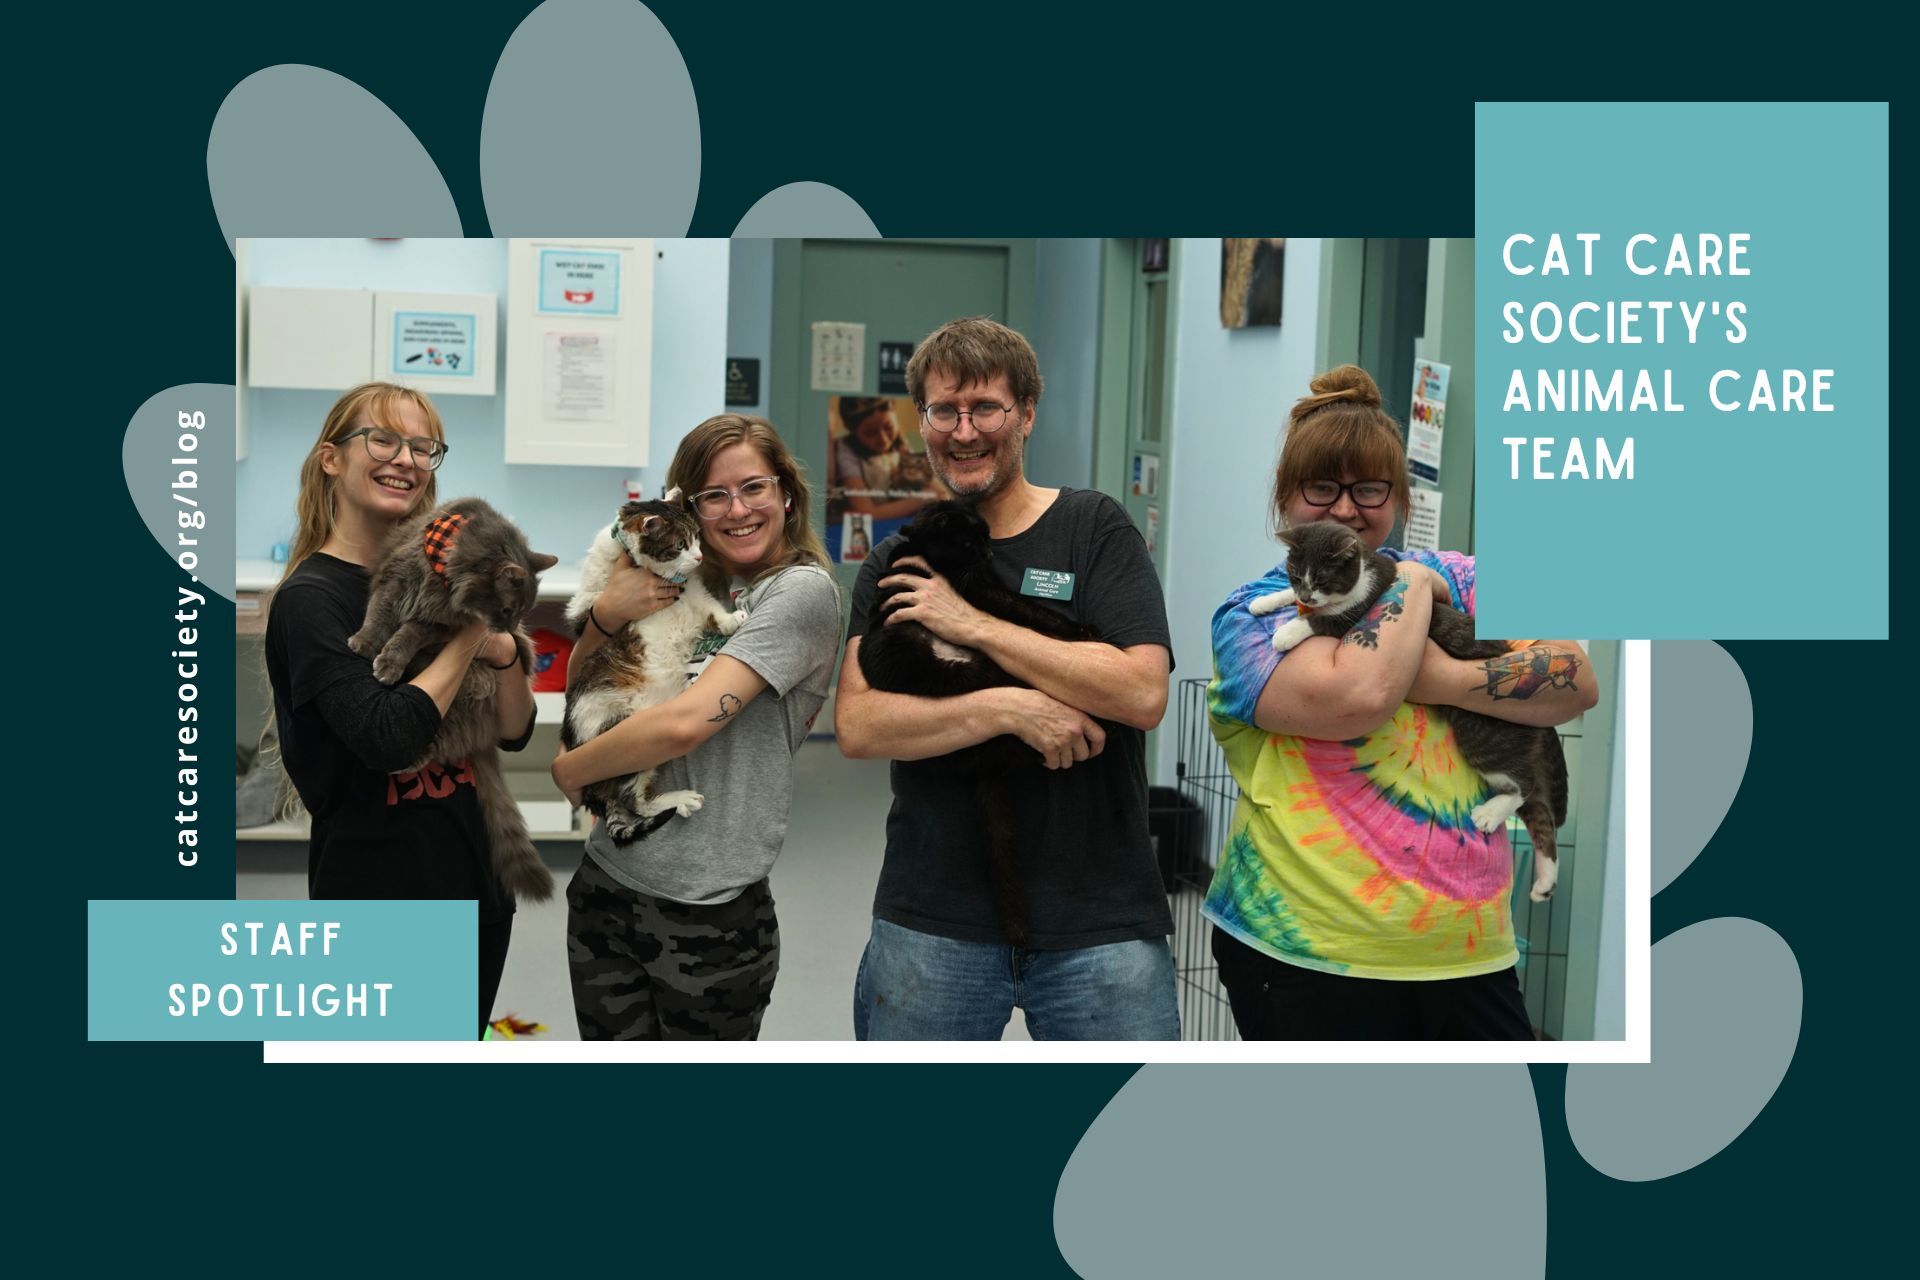 Meet Cat Care Society’s Animal Care Team!